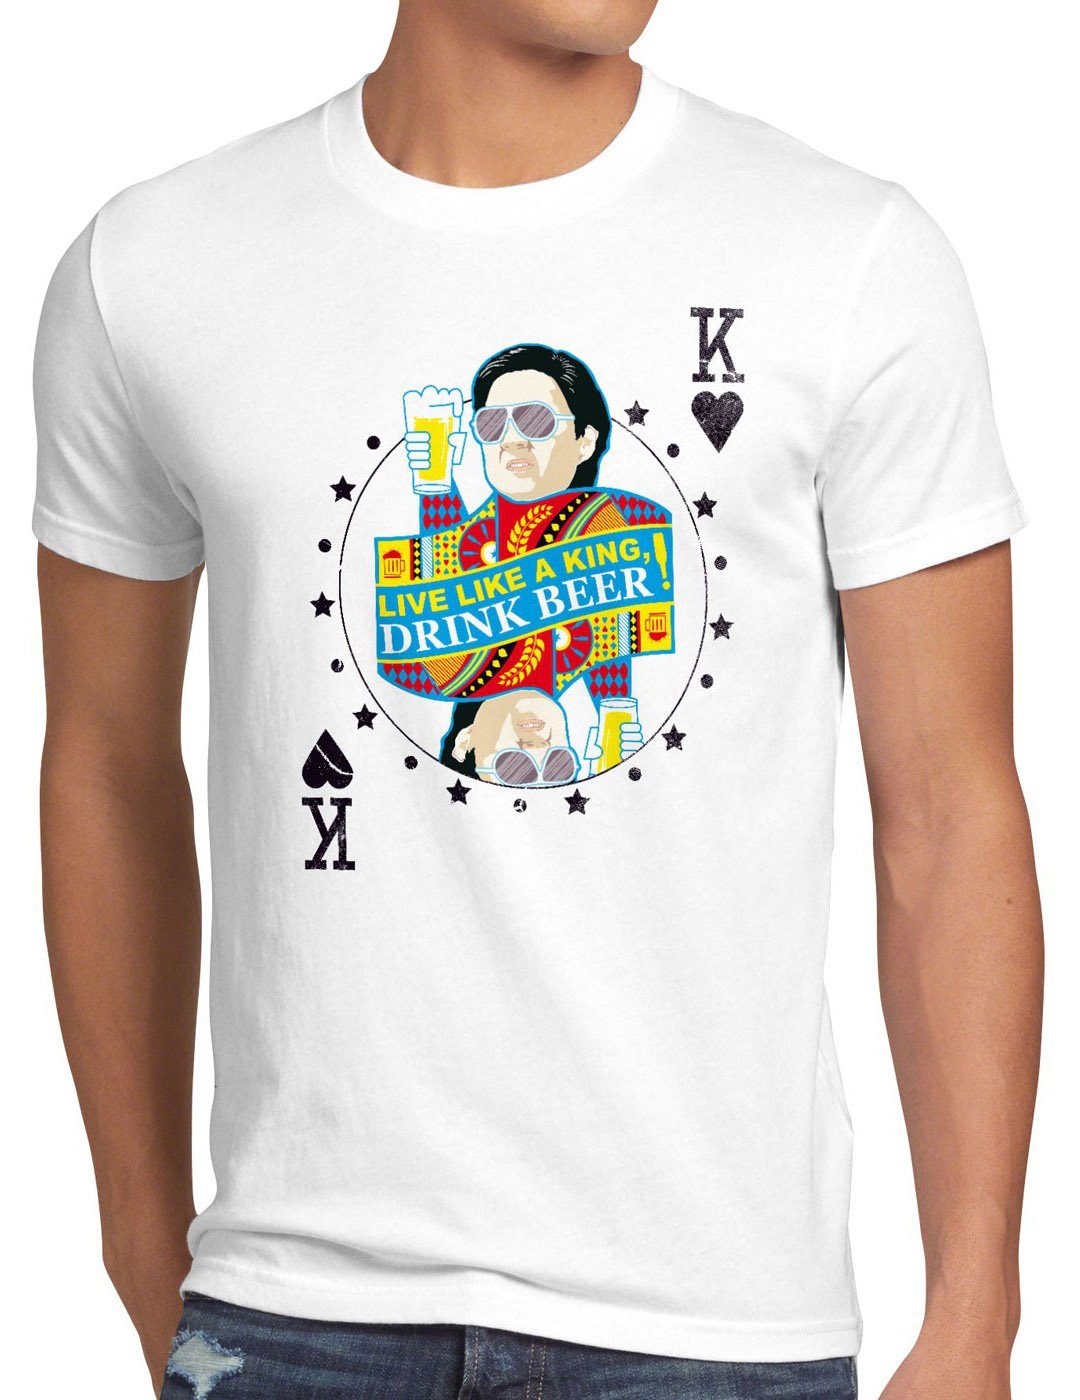 hanover T-Shirt King las casino Print-Shirt like Herren weiß a beer Live vegas drink style3 bier chow